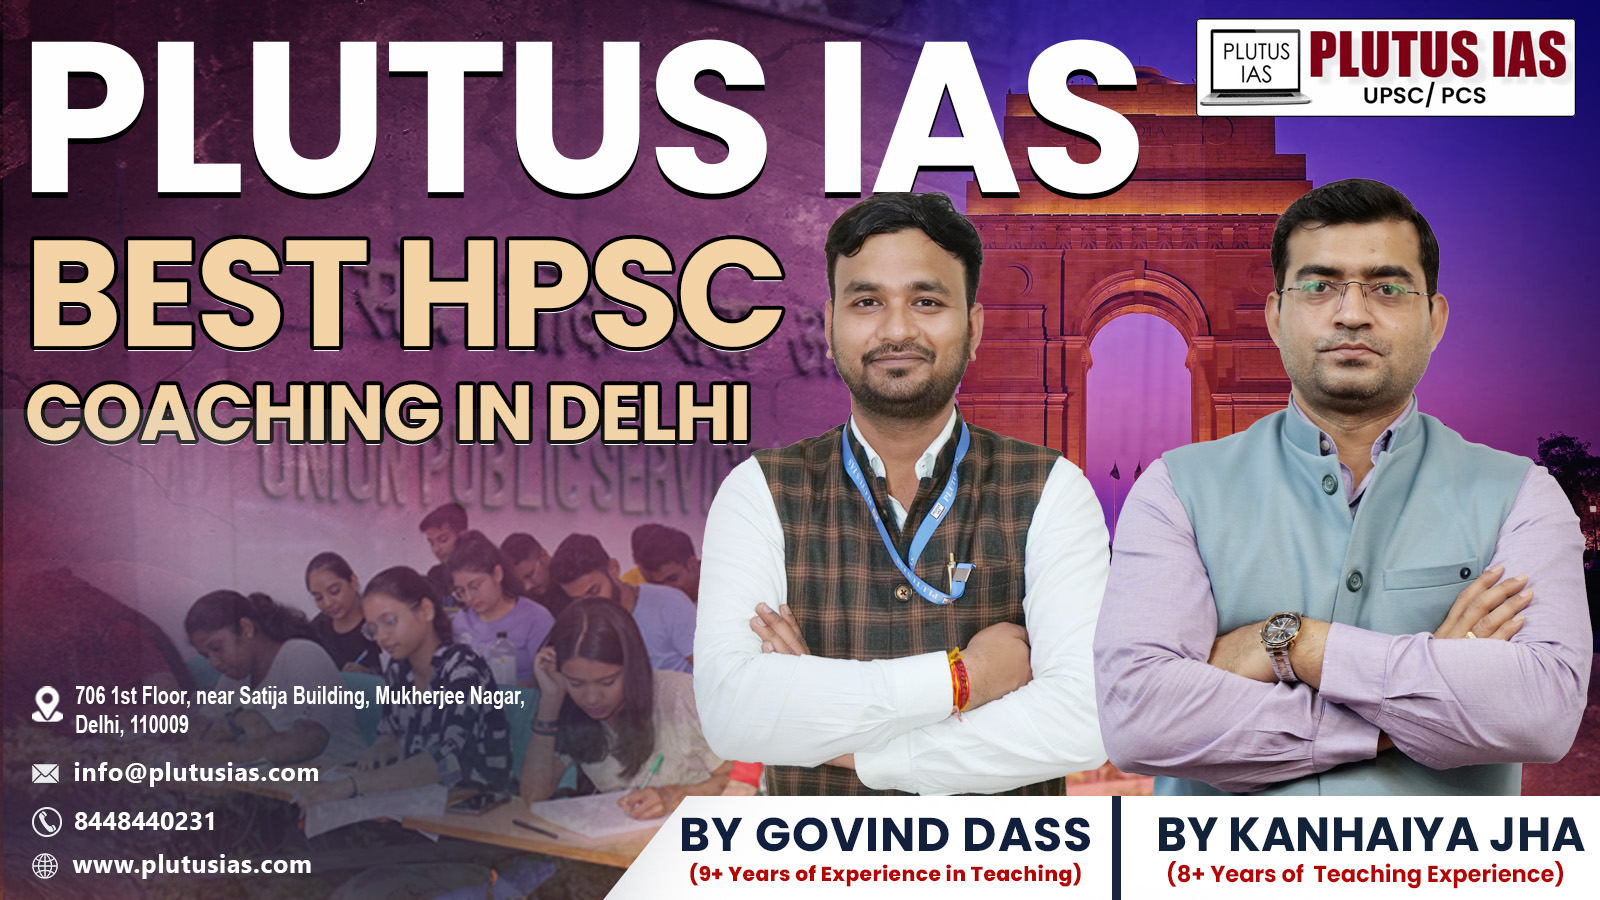 Best HPSC Coaching in Delhi